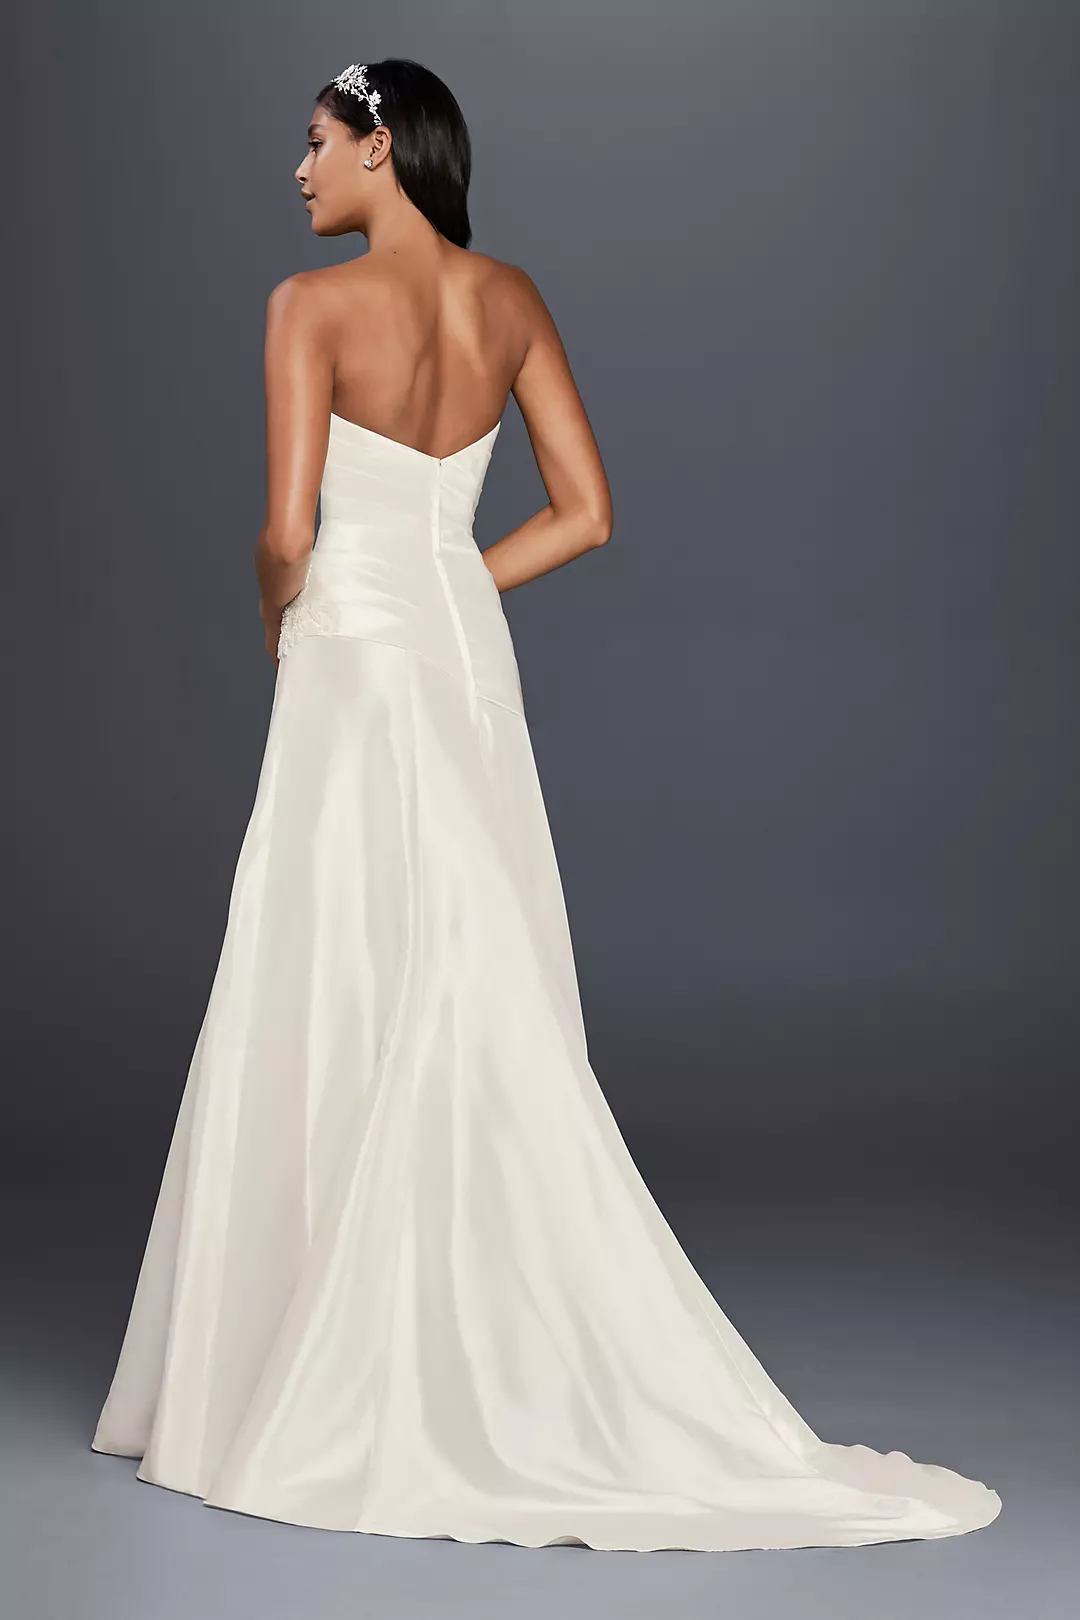 A-Line Wedding Dress with Hip Embellishment Image 2